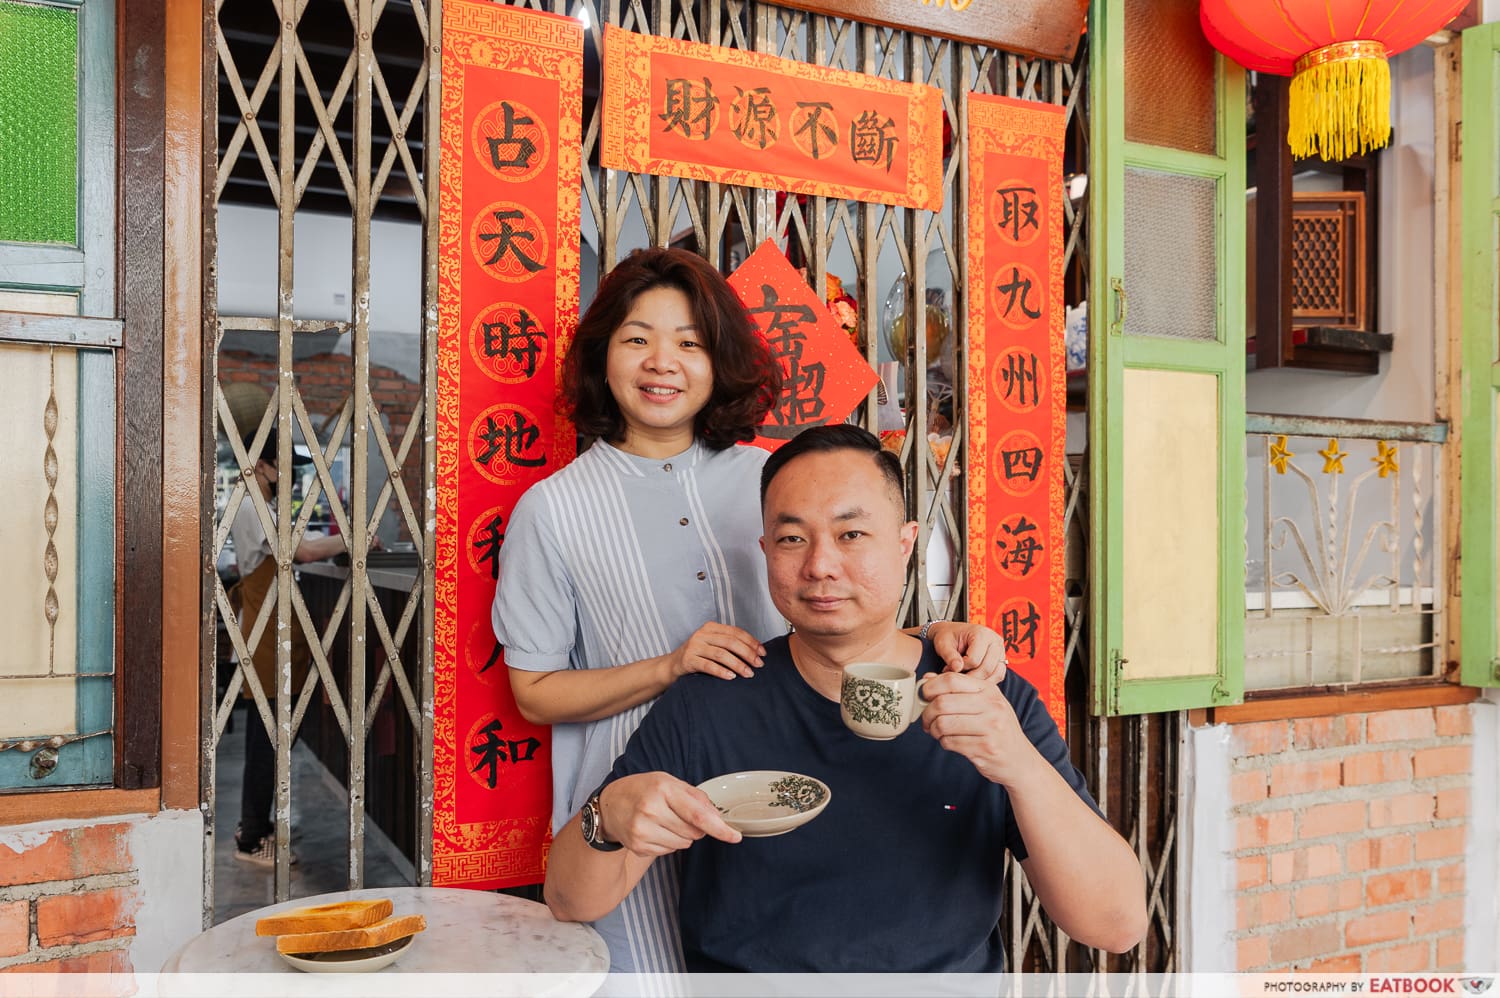 great nanyang heritage cafe - keith kang and wife